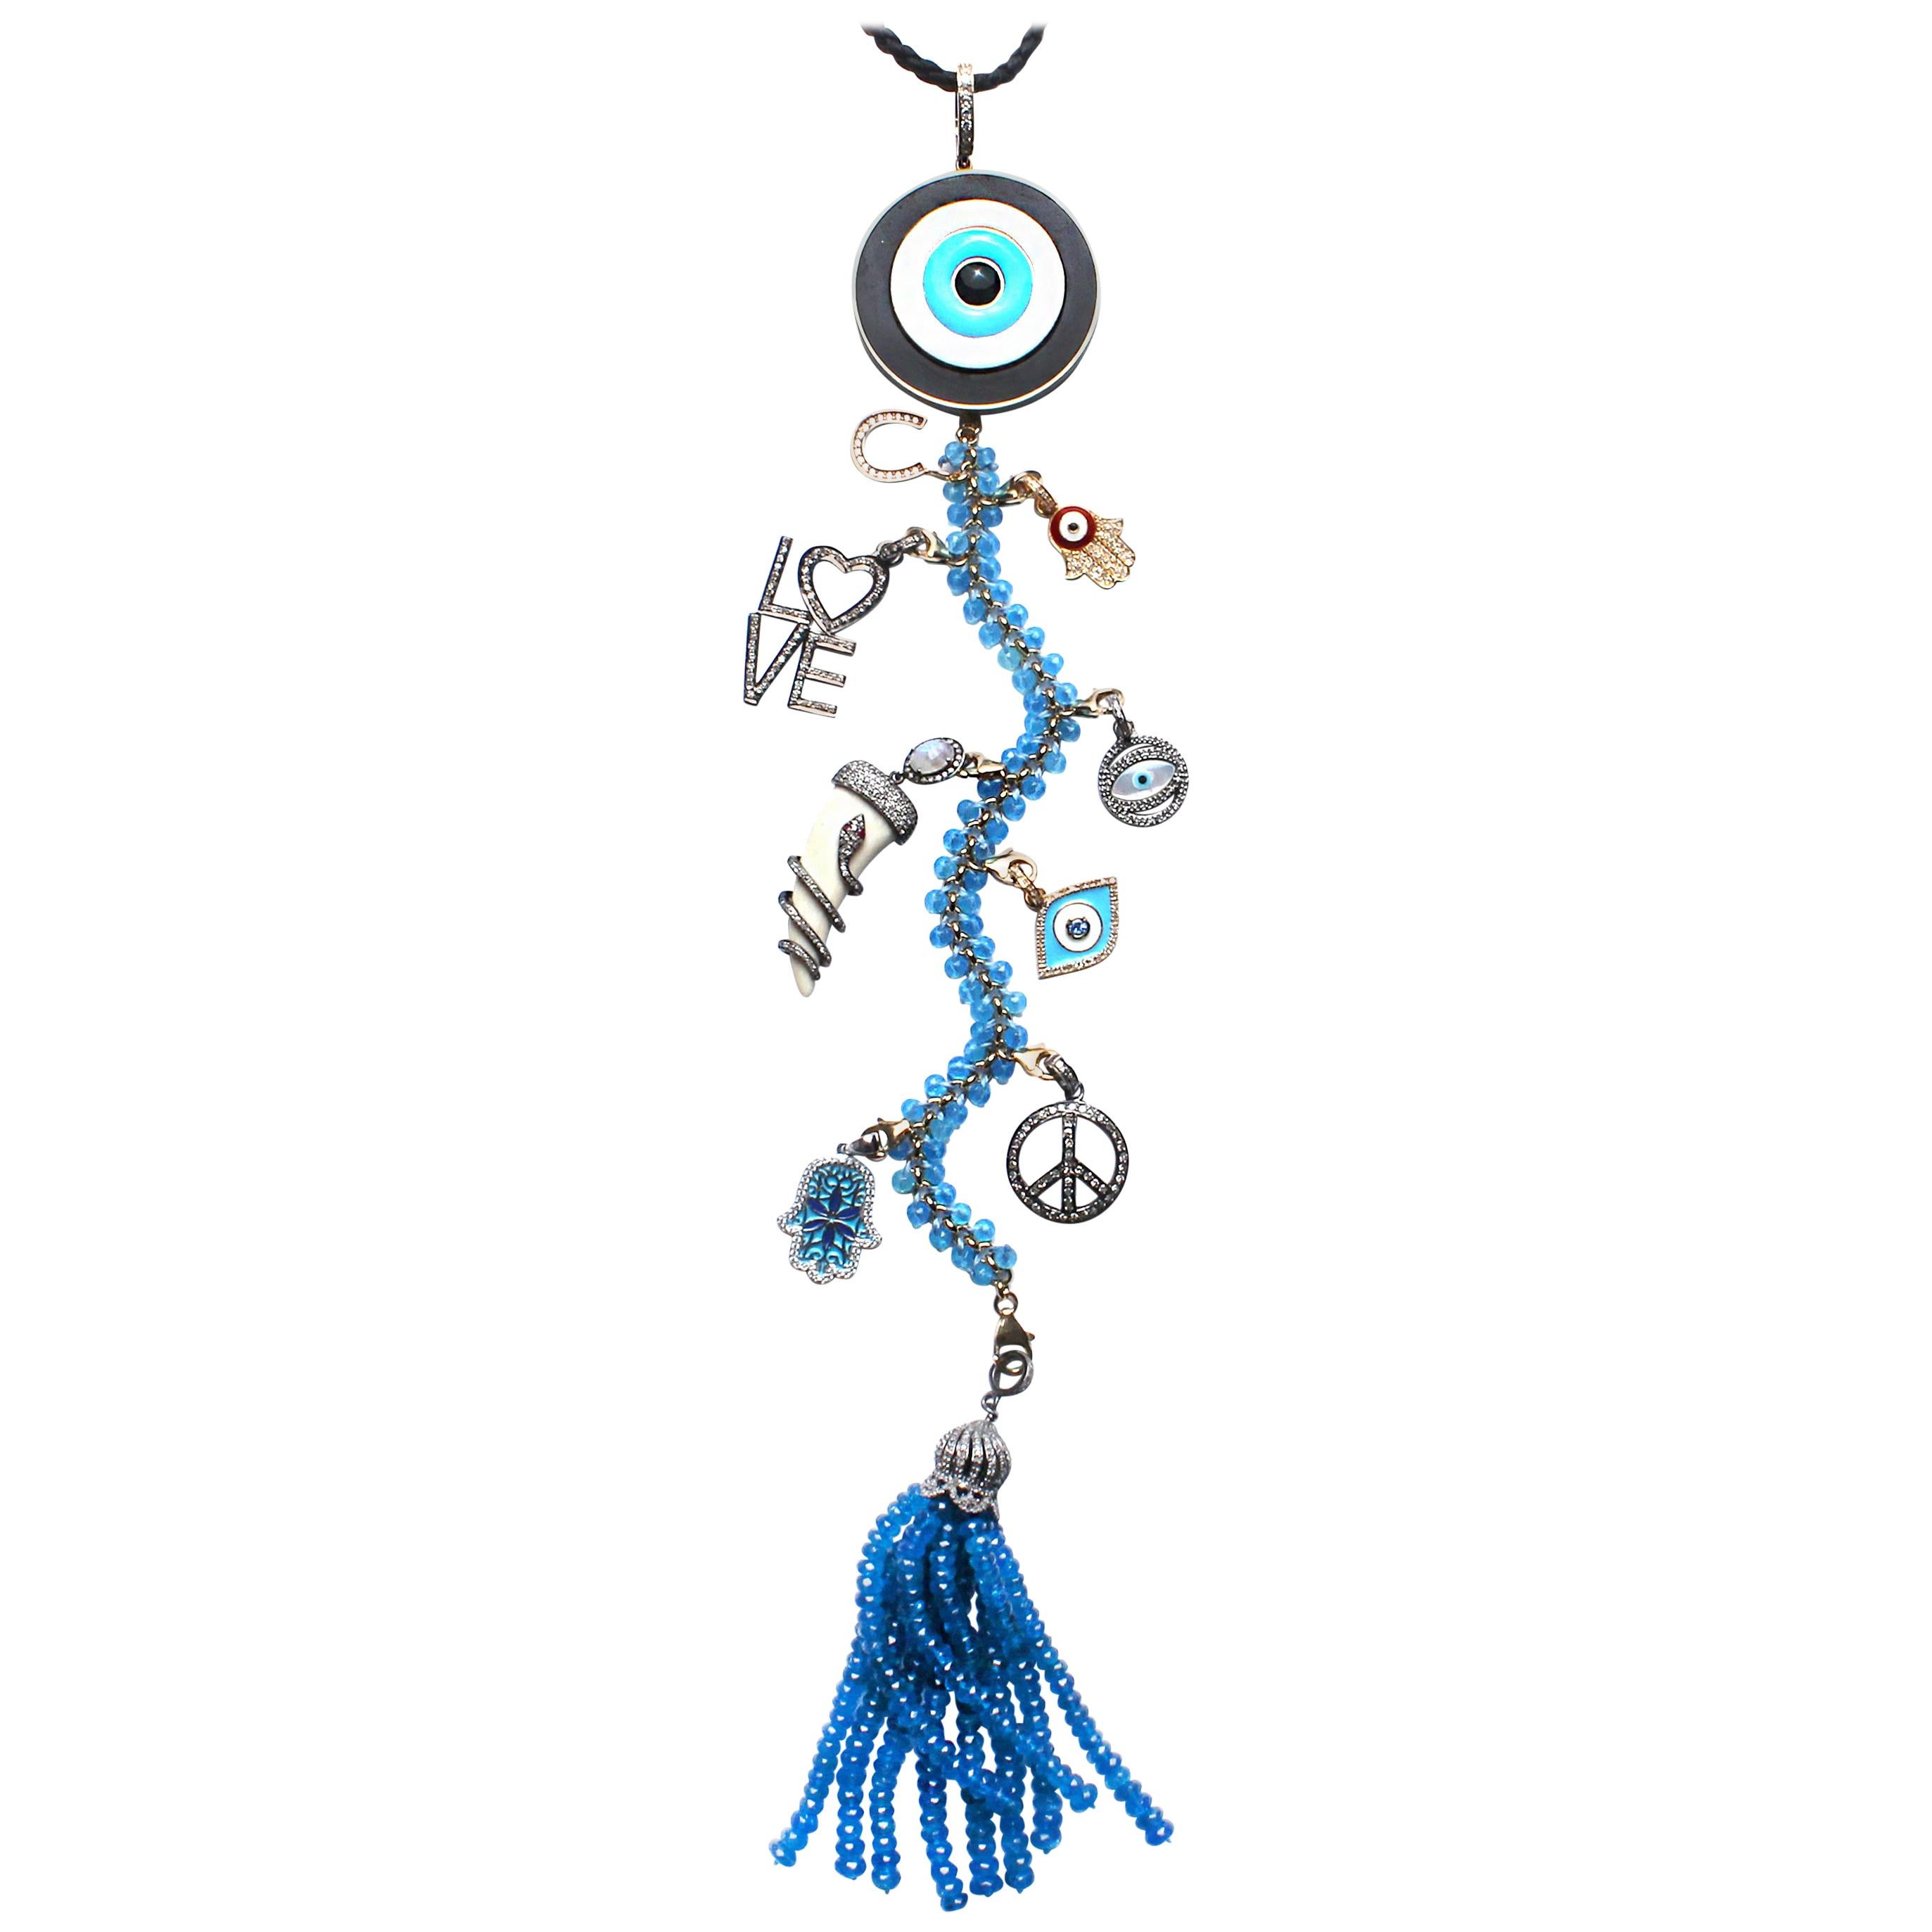 Clarissa Bronfman 'Aphrodite's Passion' Symbol Tree Necklace